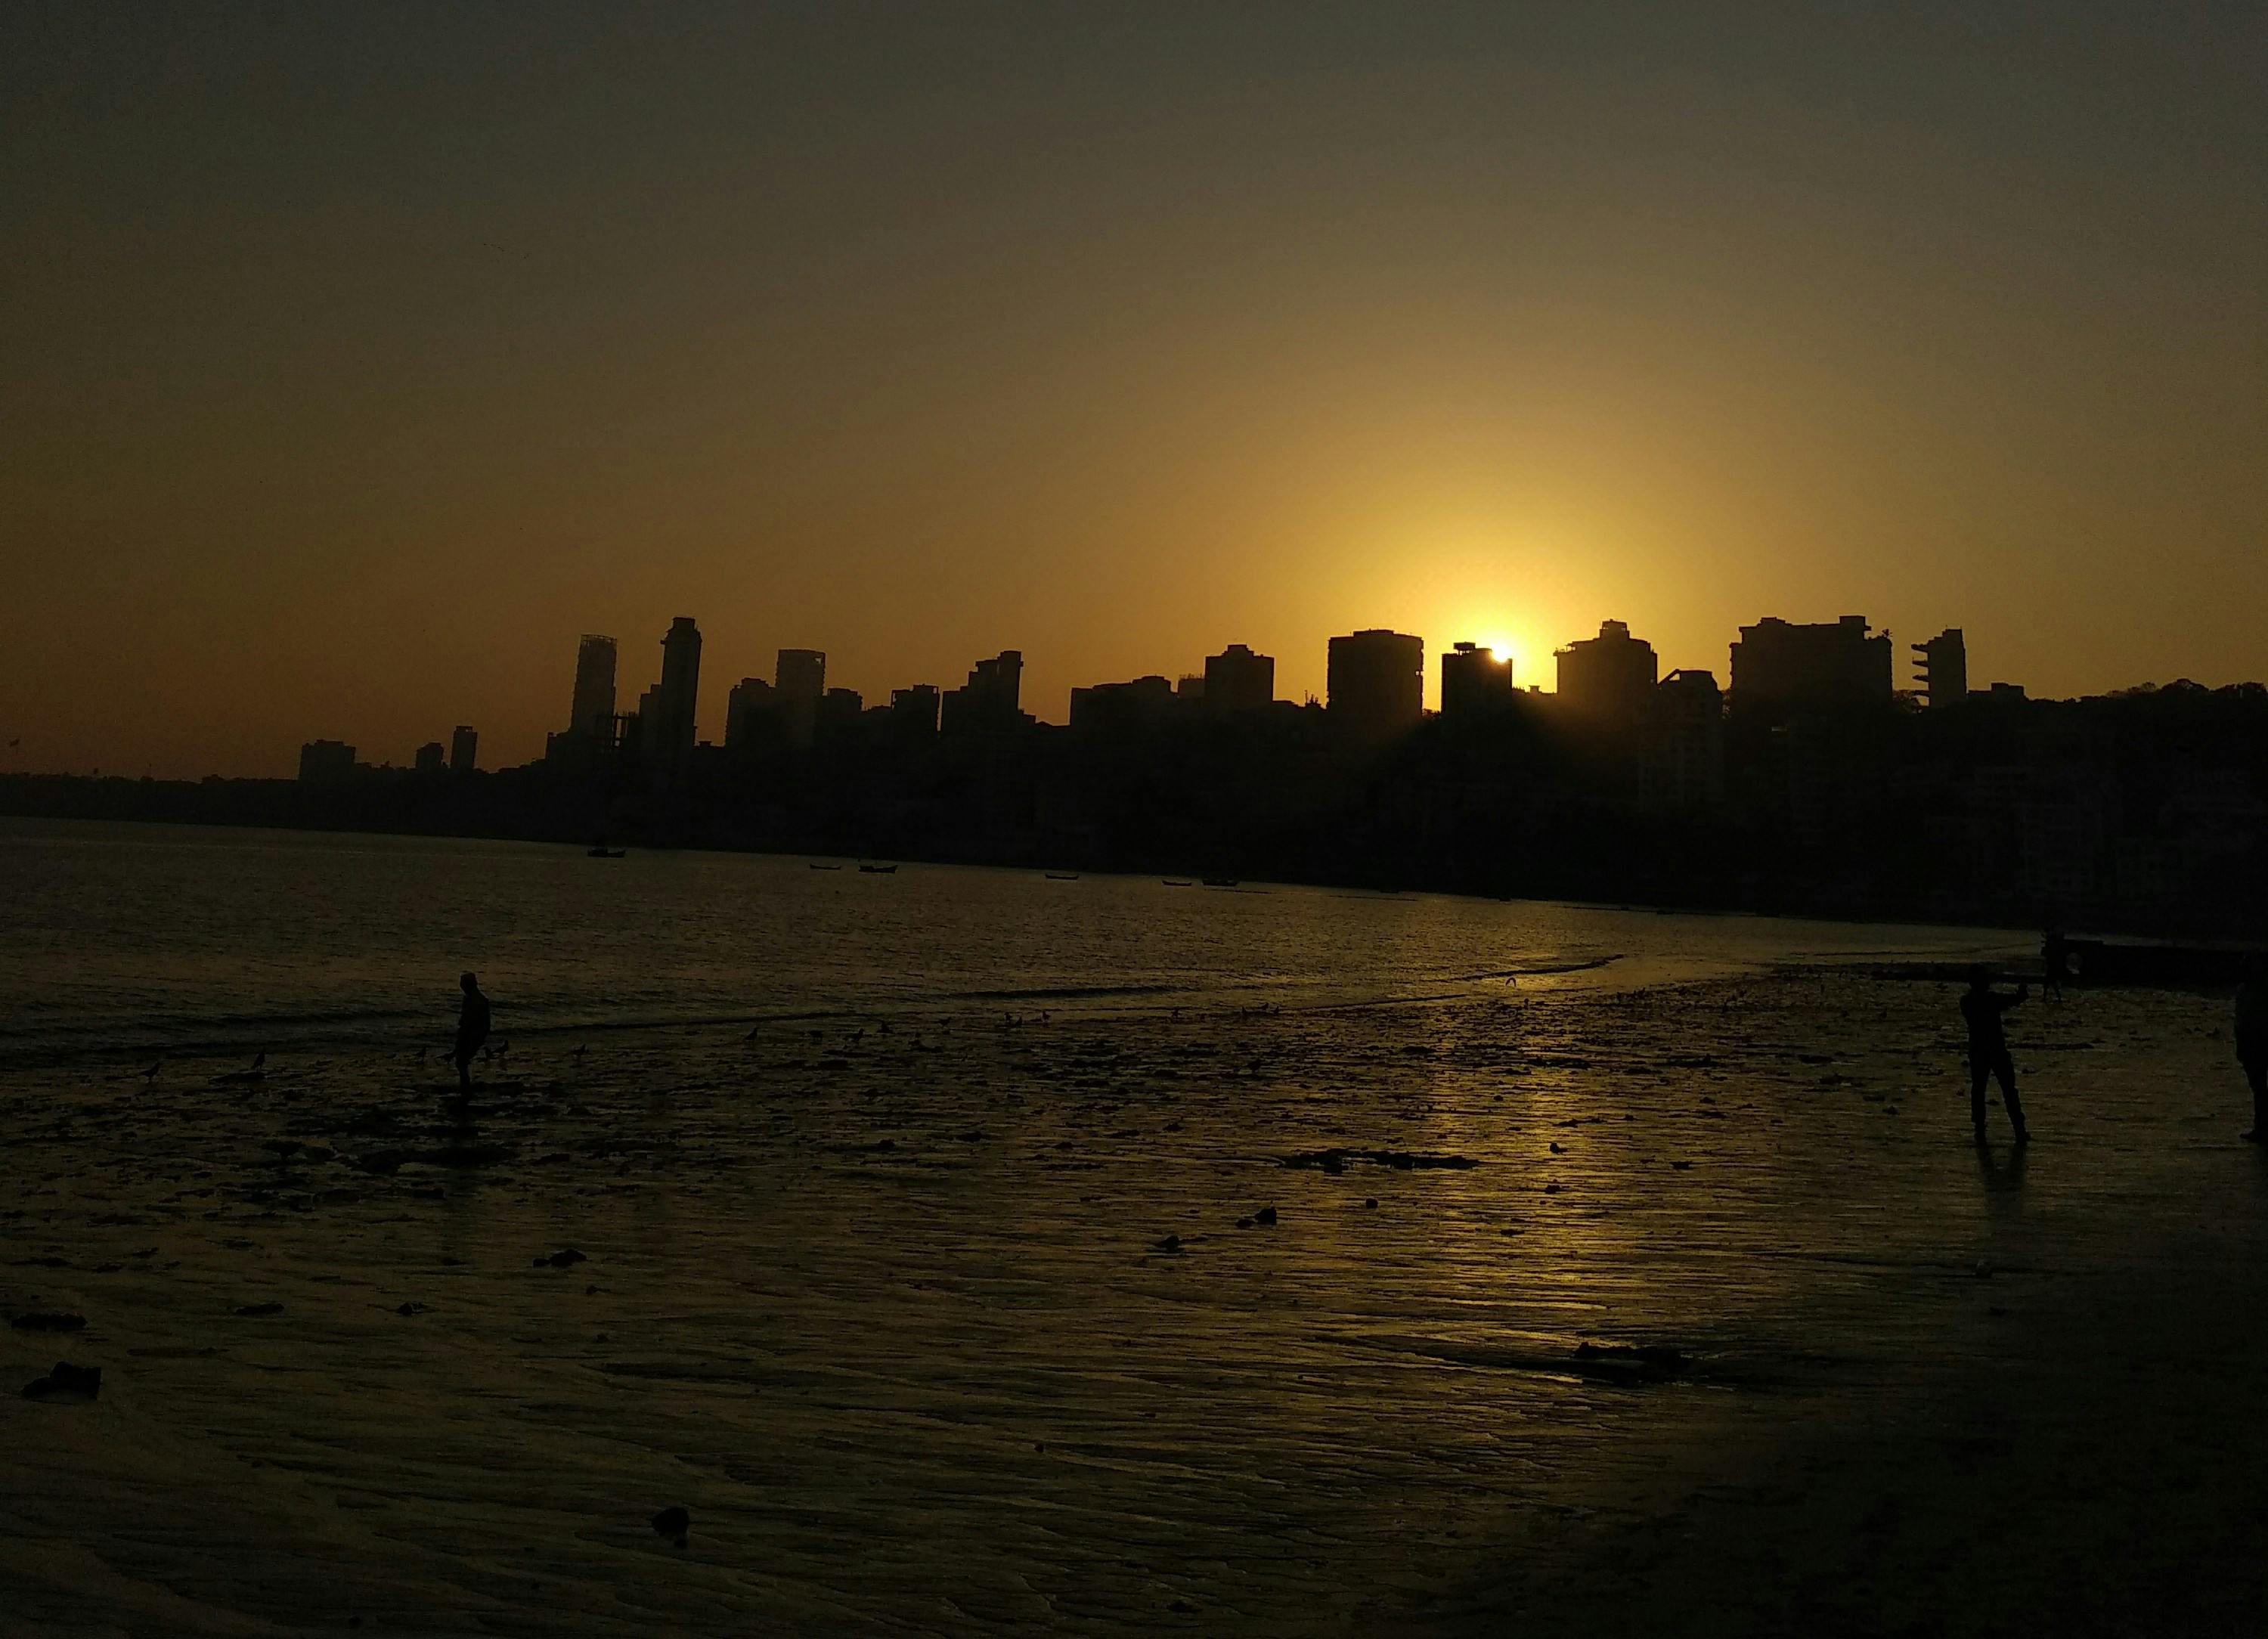 Free stock photo of #Bombay #beach #sunset #photography #nature, #naturelove #buildings #silhouette #seaview #mud